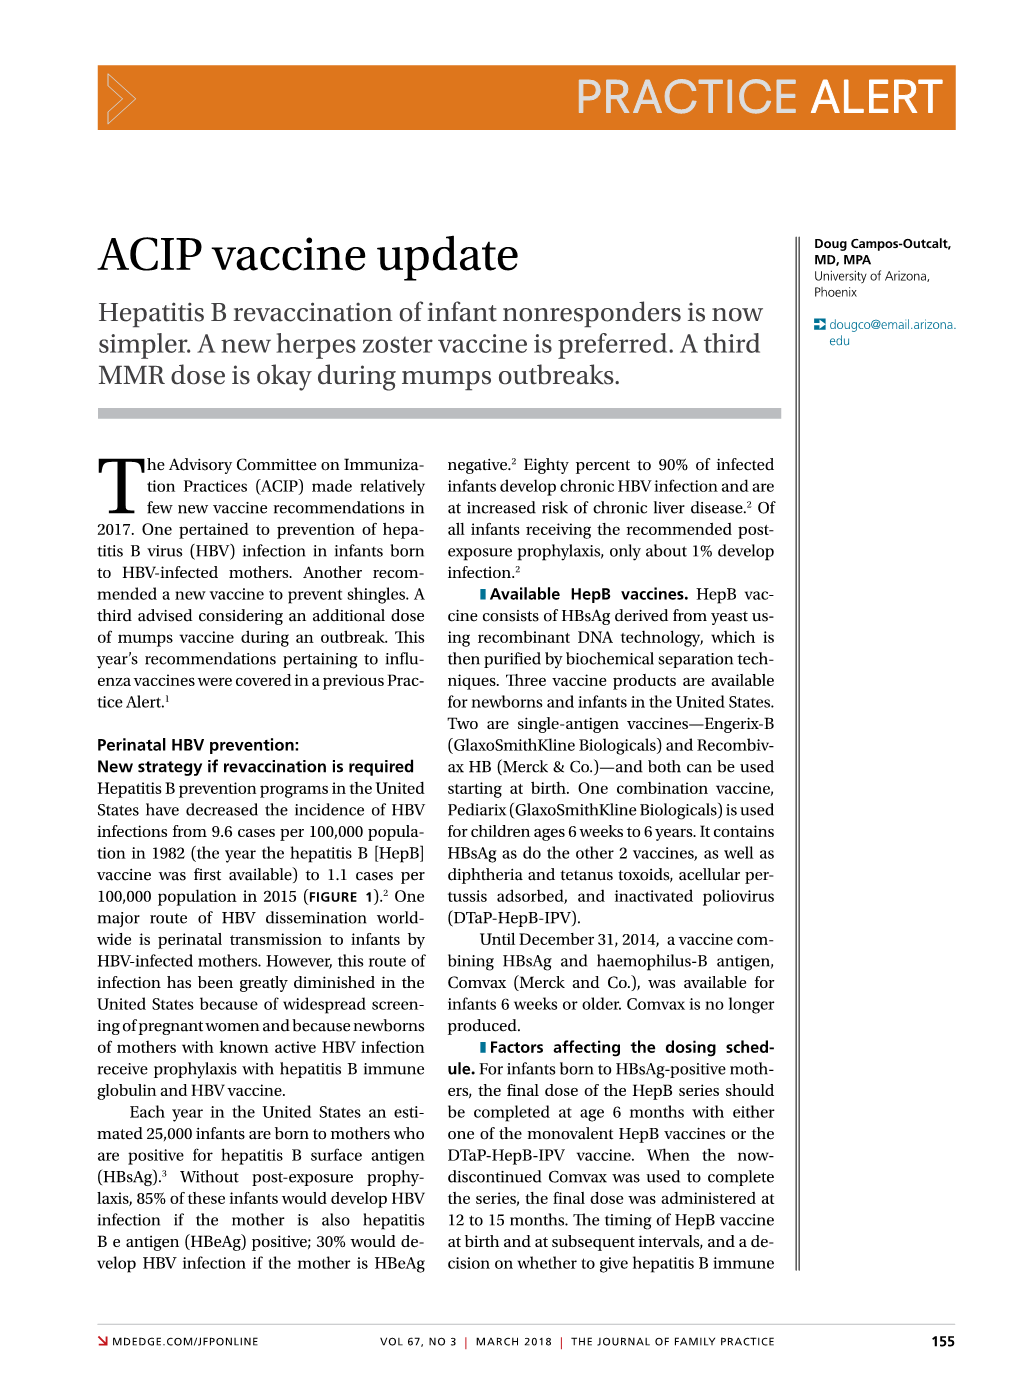 ACIP Vaccine Update University of Arizona, Phoenix